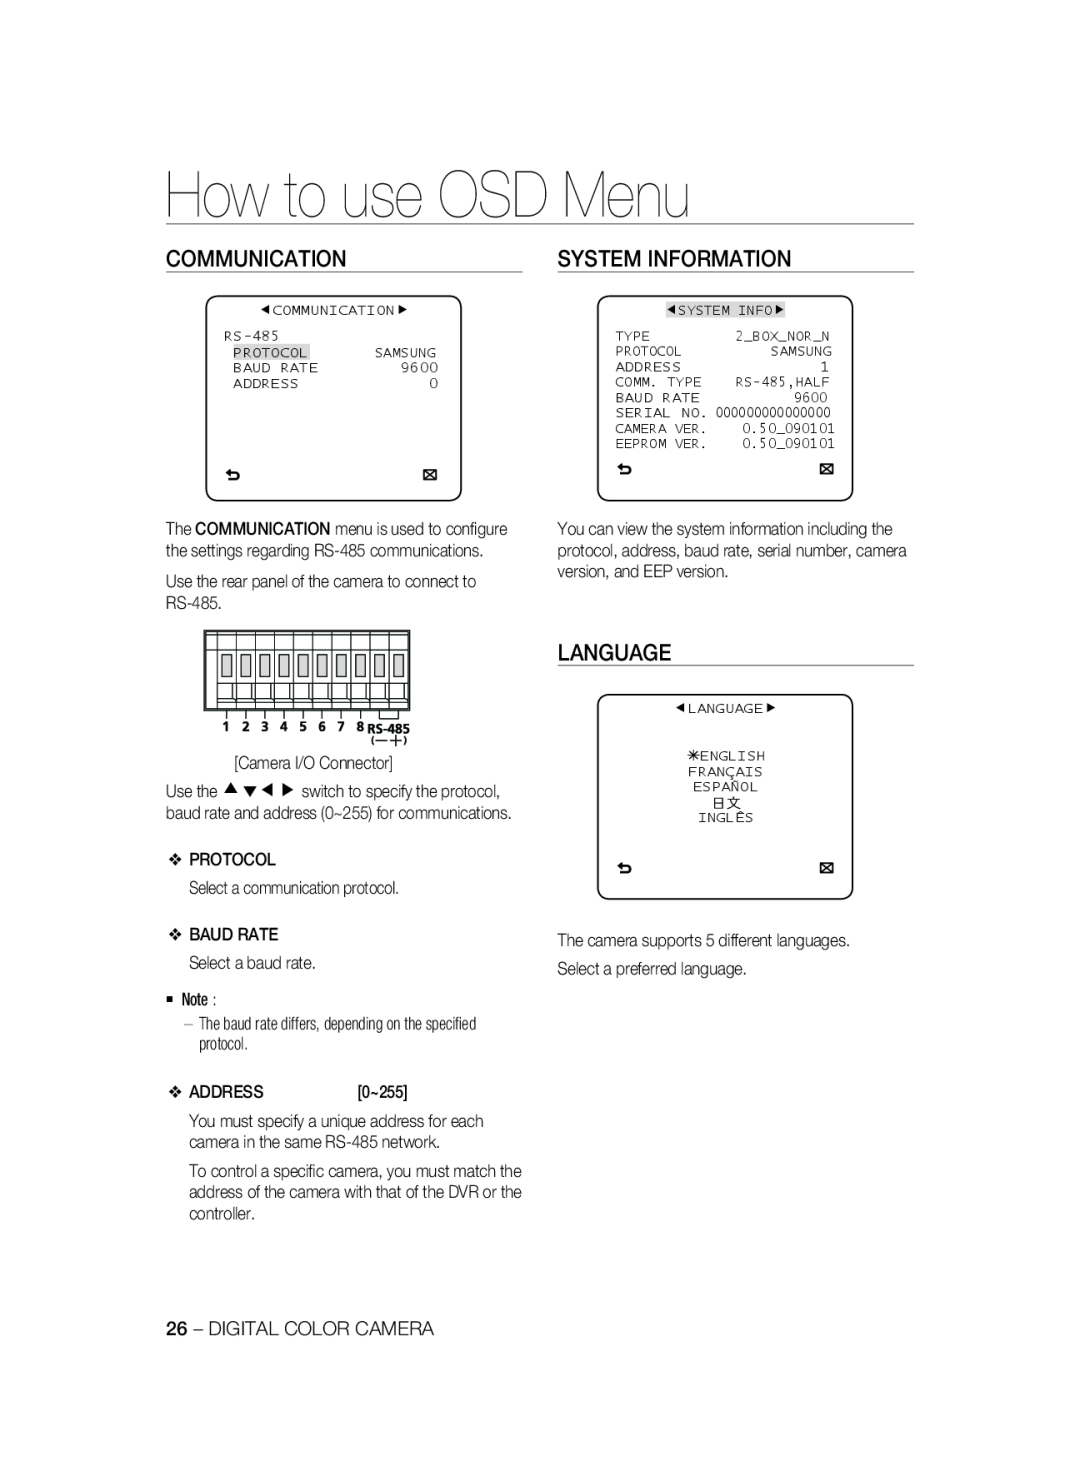 Samsung SCC-A2333P Communication, System Information, Language, How to use OSD Menu, Camera I/O Connector, Address, 0~255 